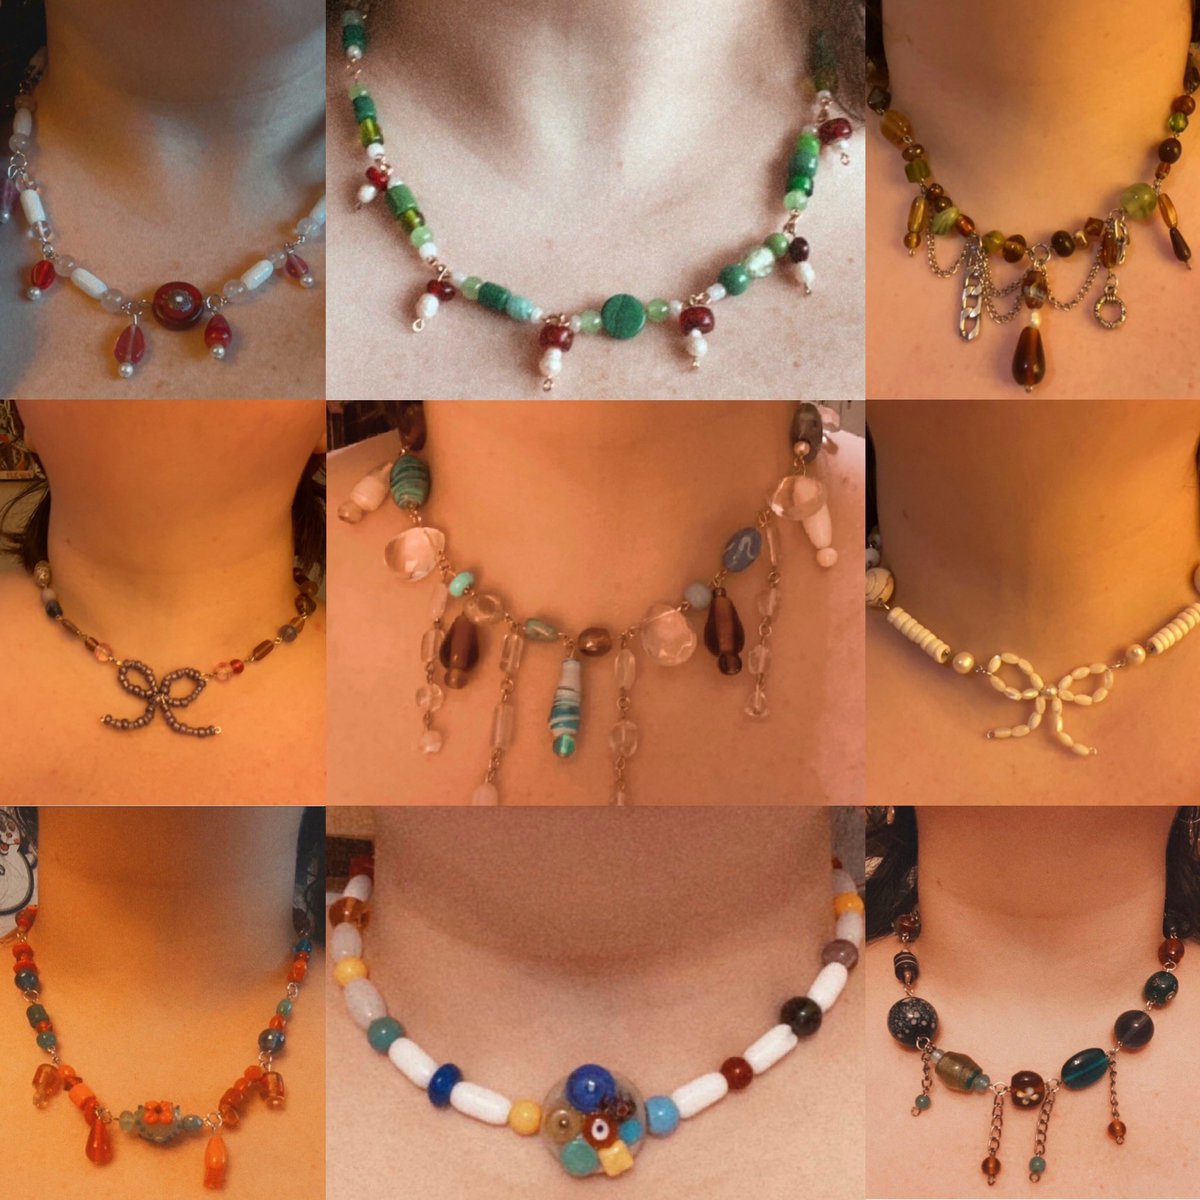 Spotlight on these beauties #glassjewelry #glassbeads #chunkynecklace